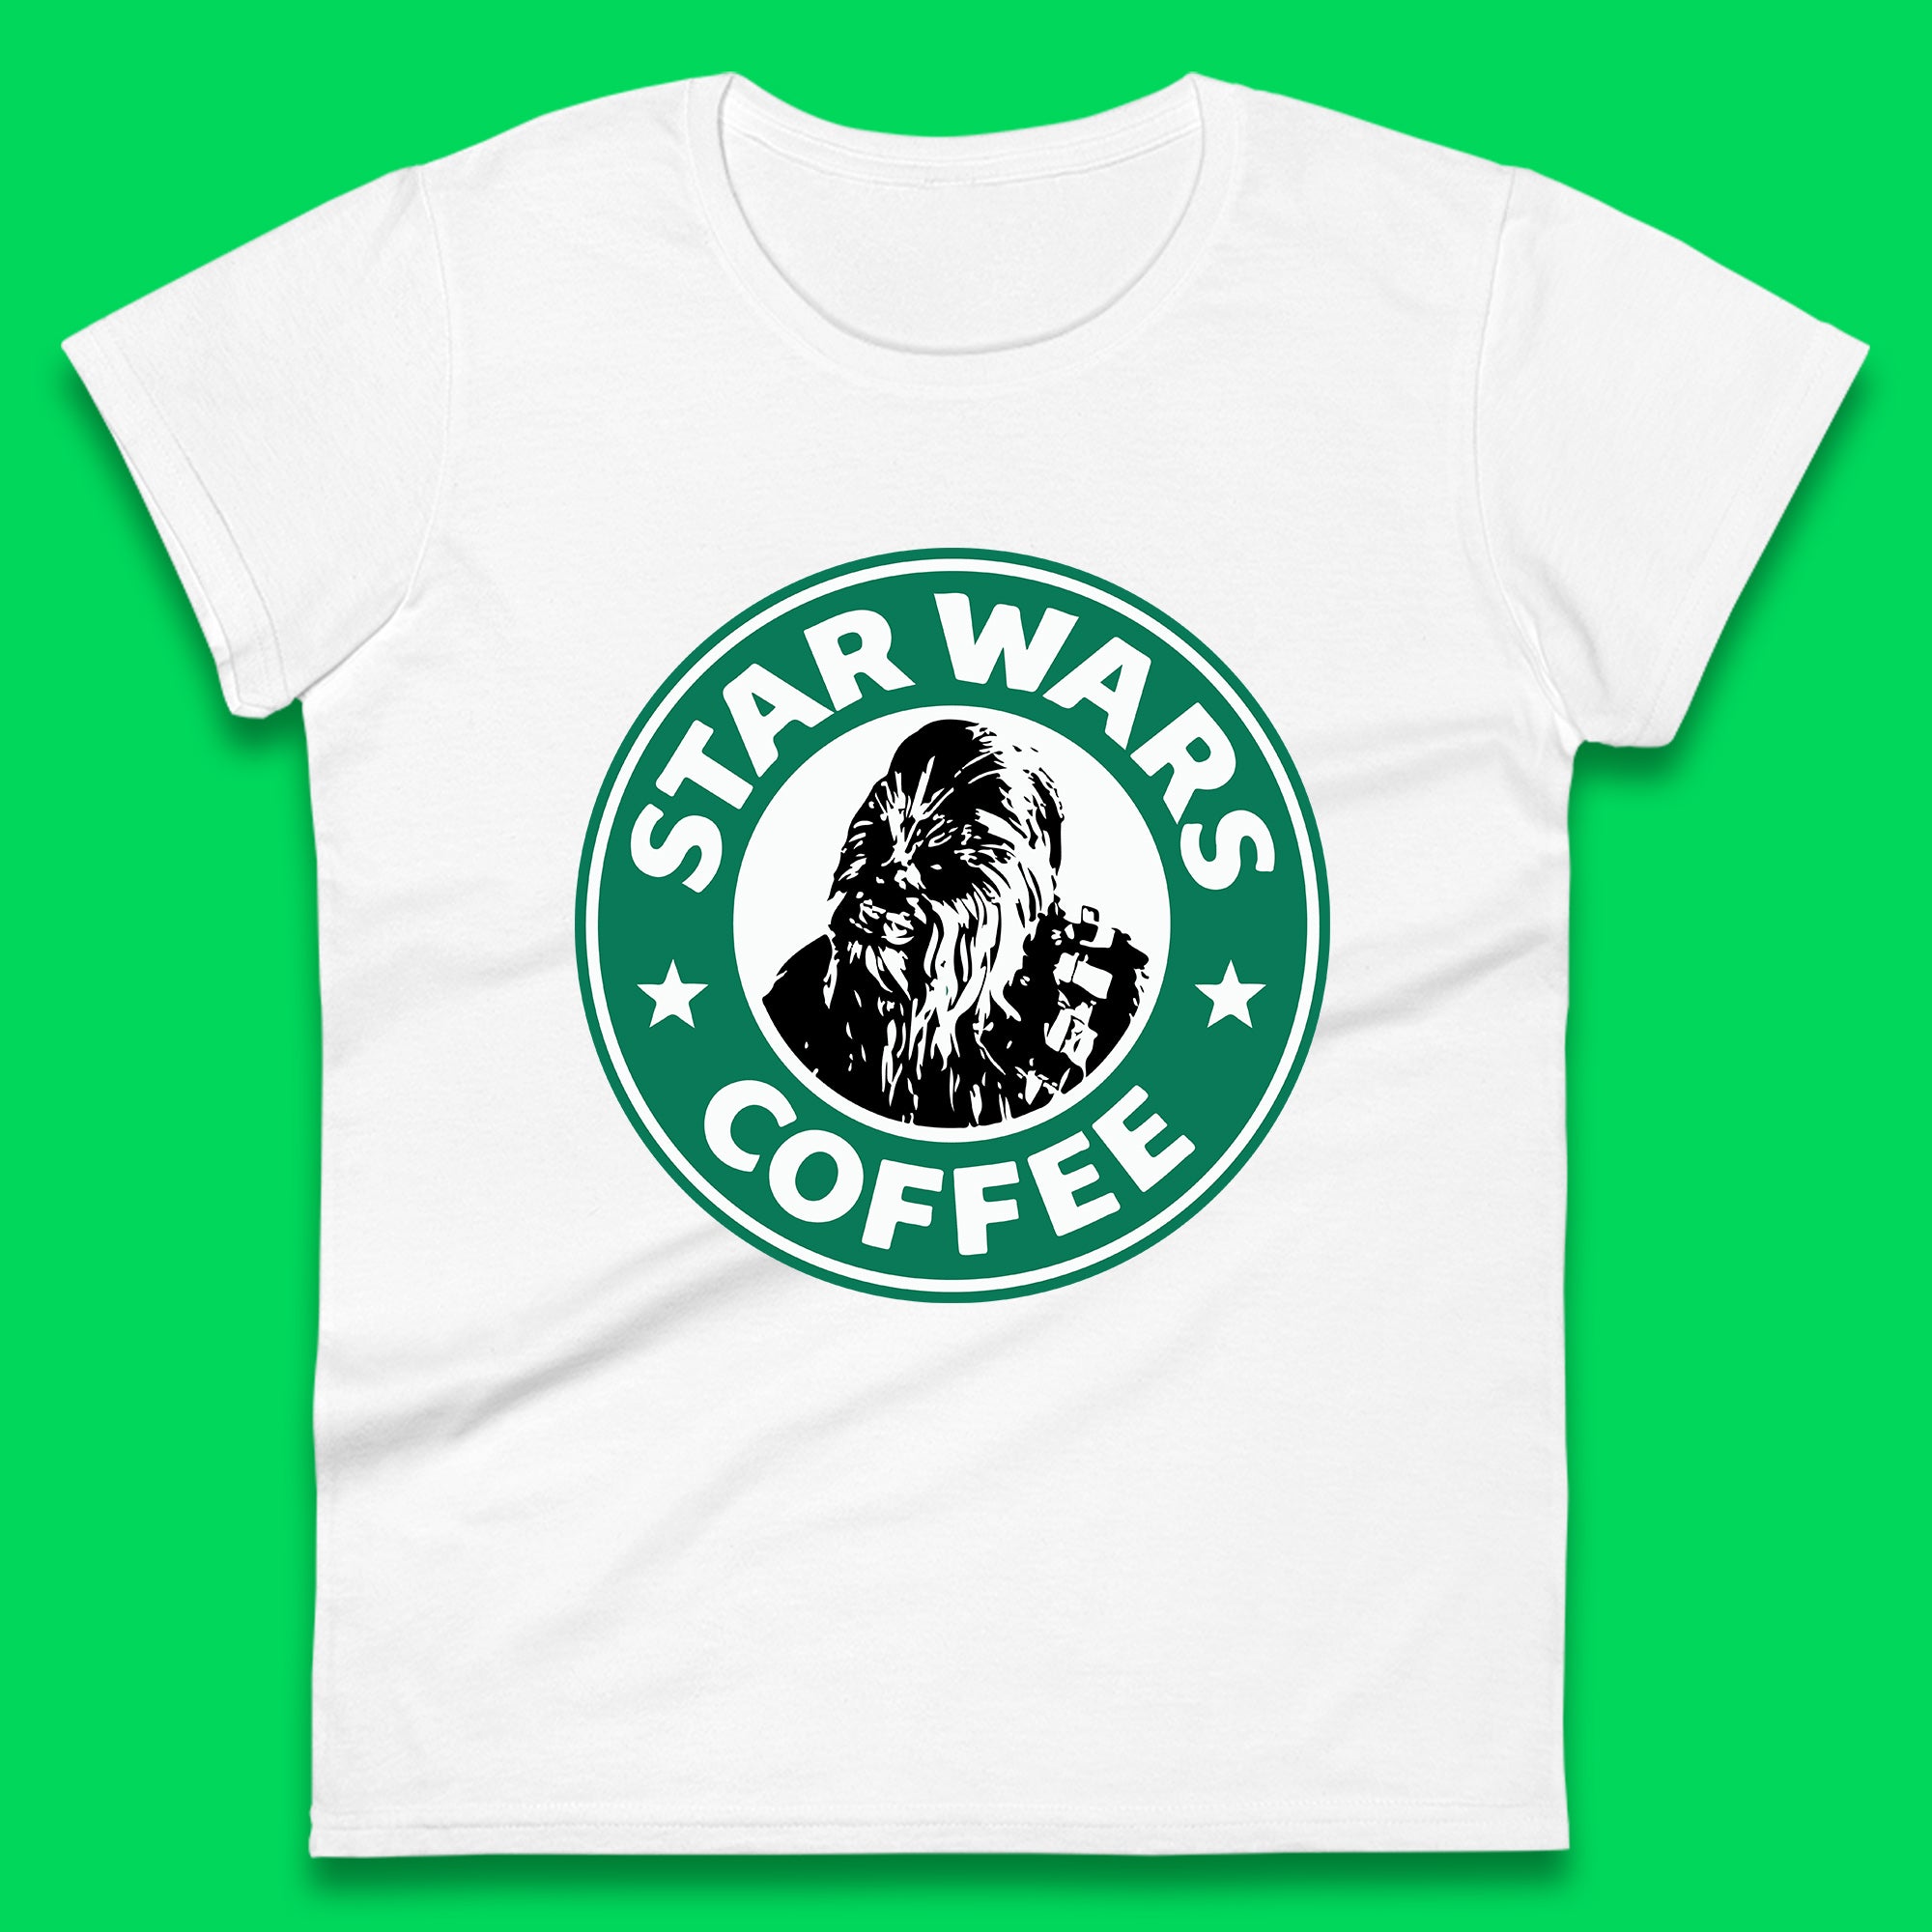 Chewbacca Star Wars Coffee Sci-fi Action Adventure Movie Character Starbucks Coffee Spoof 46th Anniversary Womens Tee Top